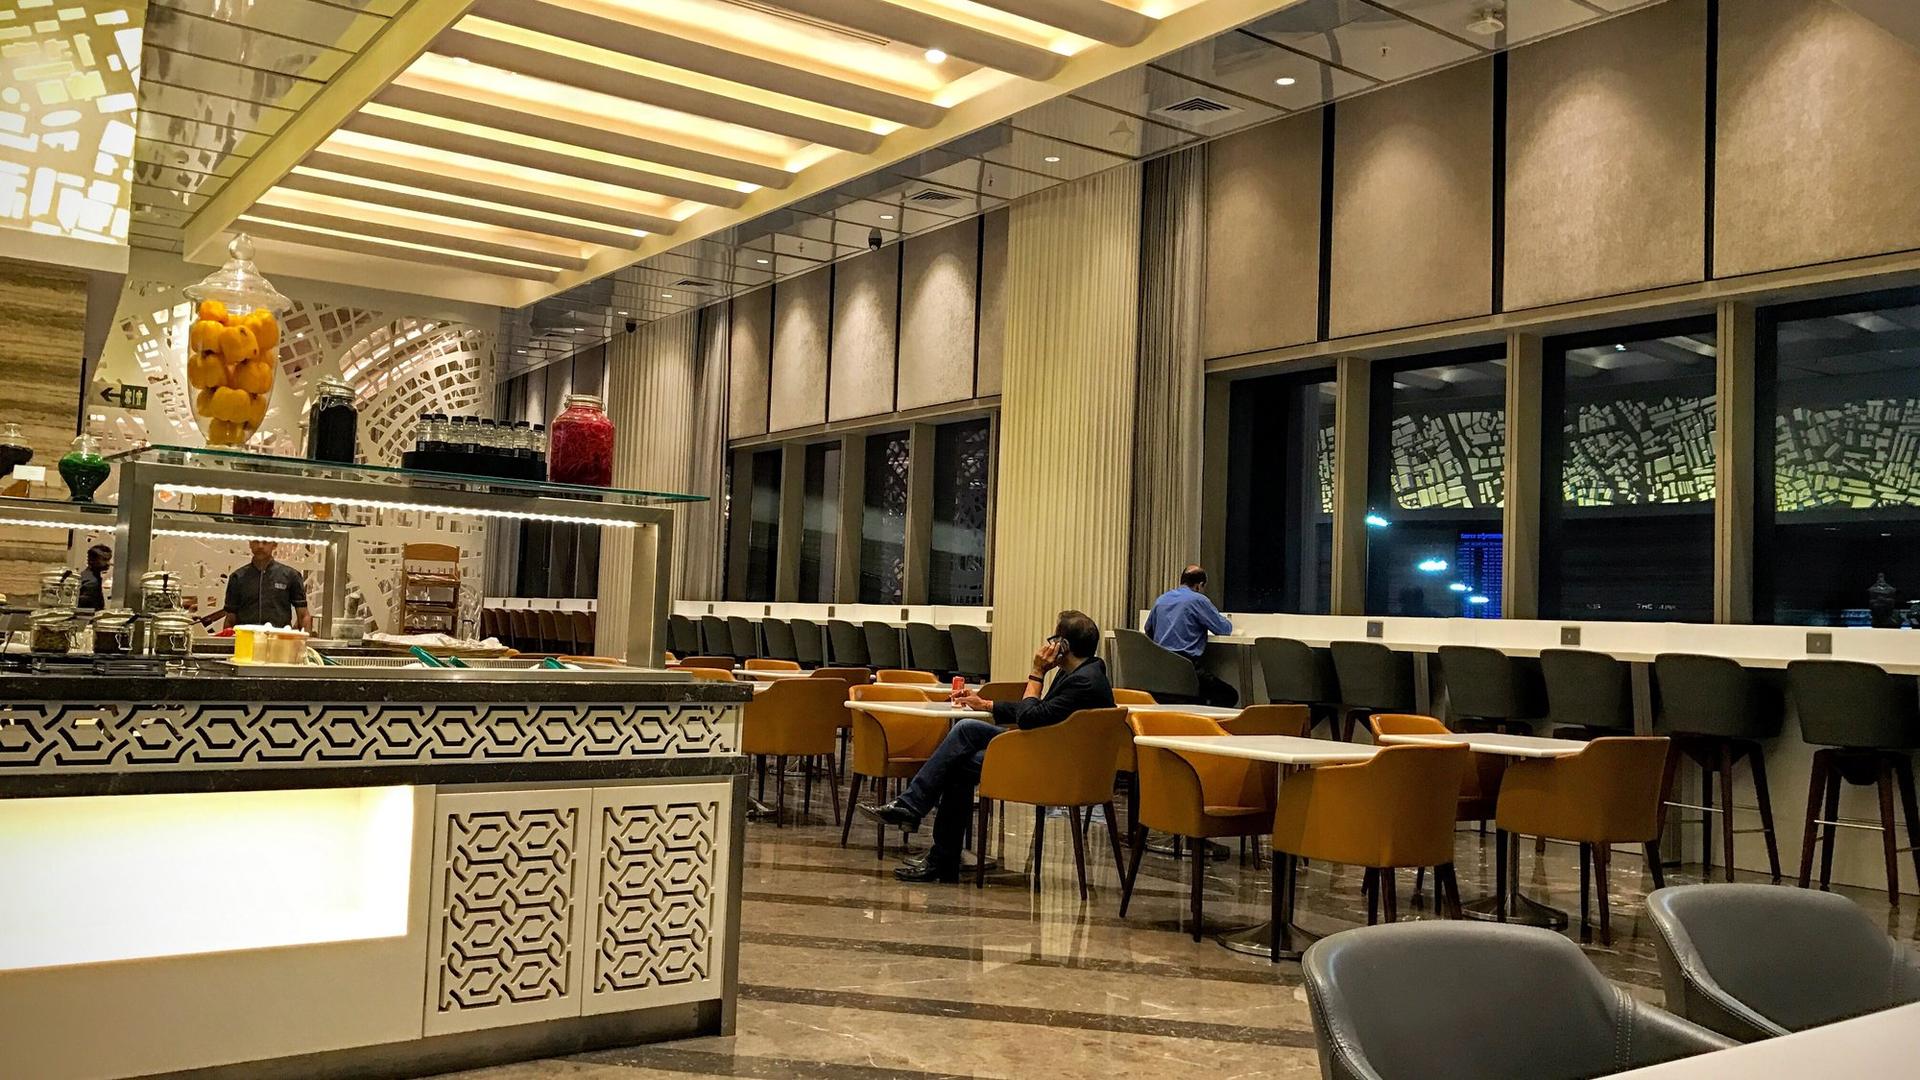 Adani Lounge (International East Wing) image 1 of 1